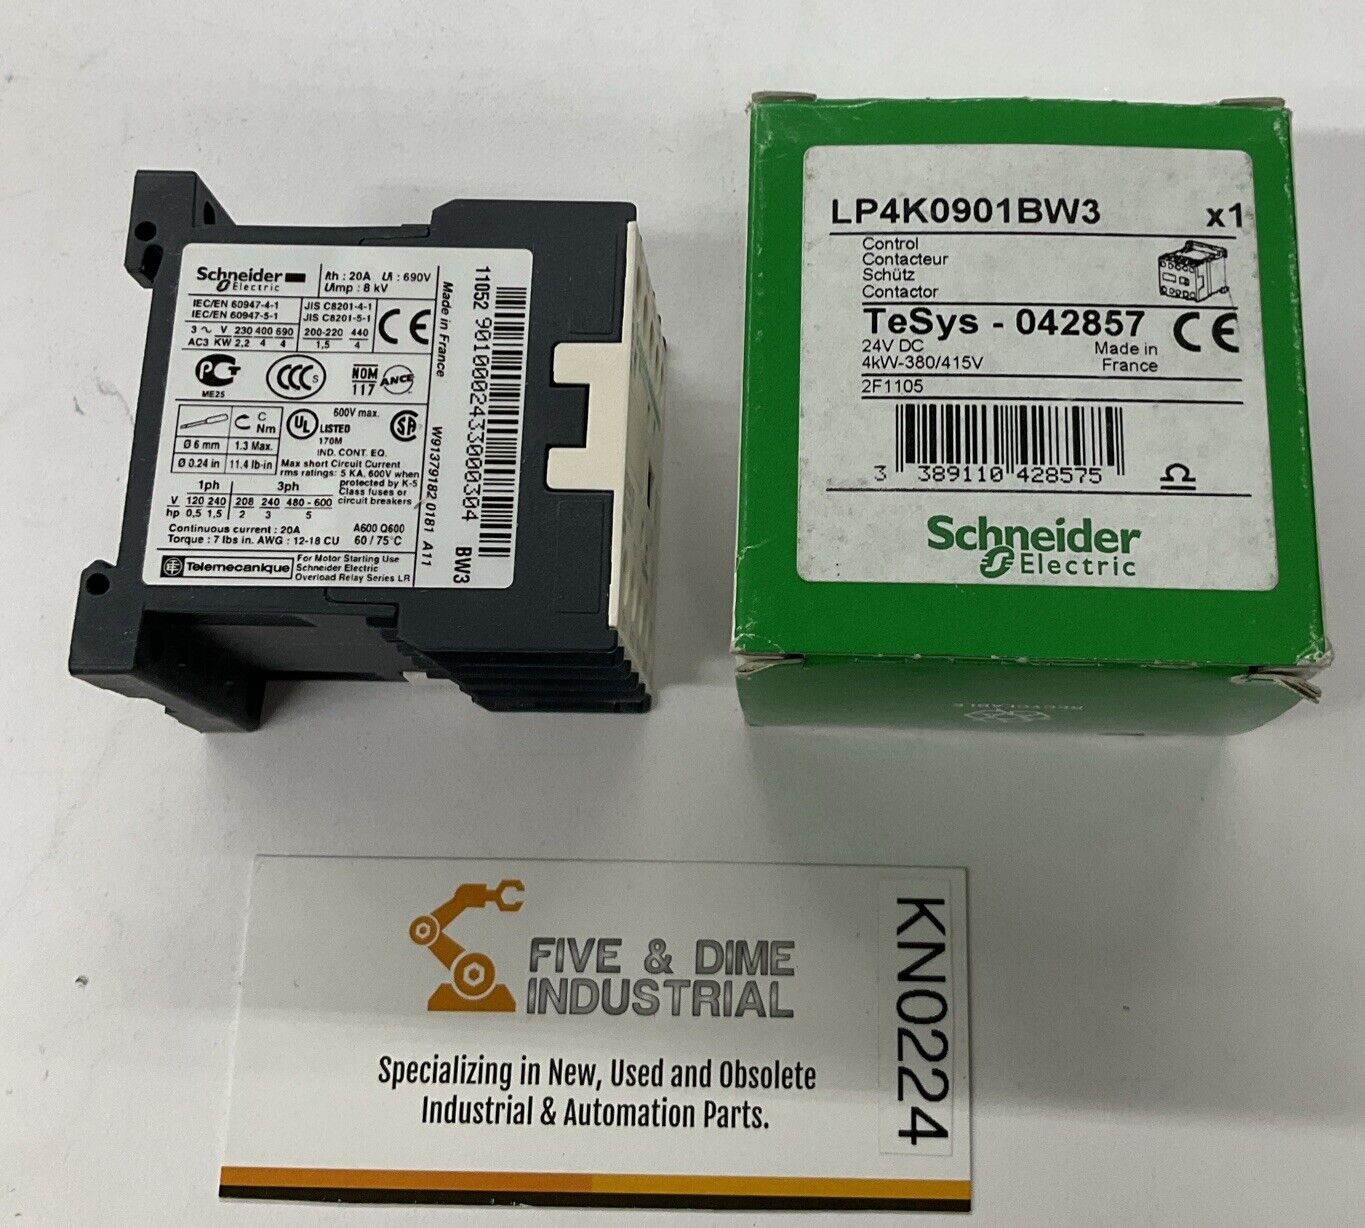 Schneider Electric LP4K0901BW3 24VDC Contactor (CL159)